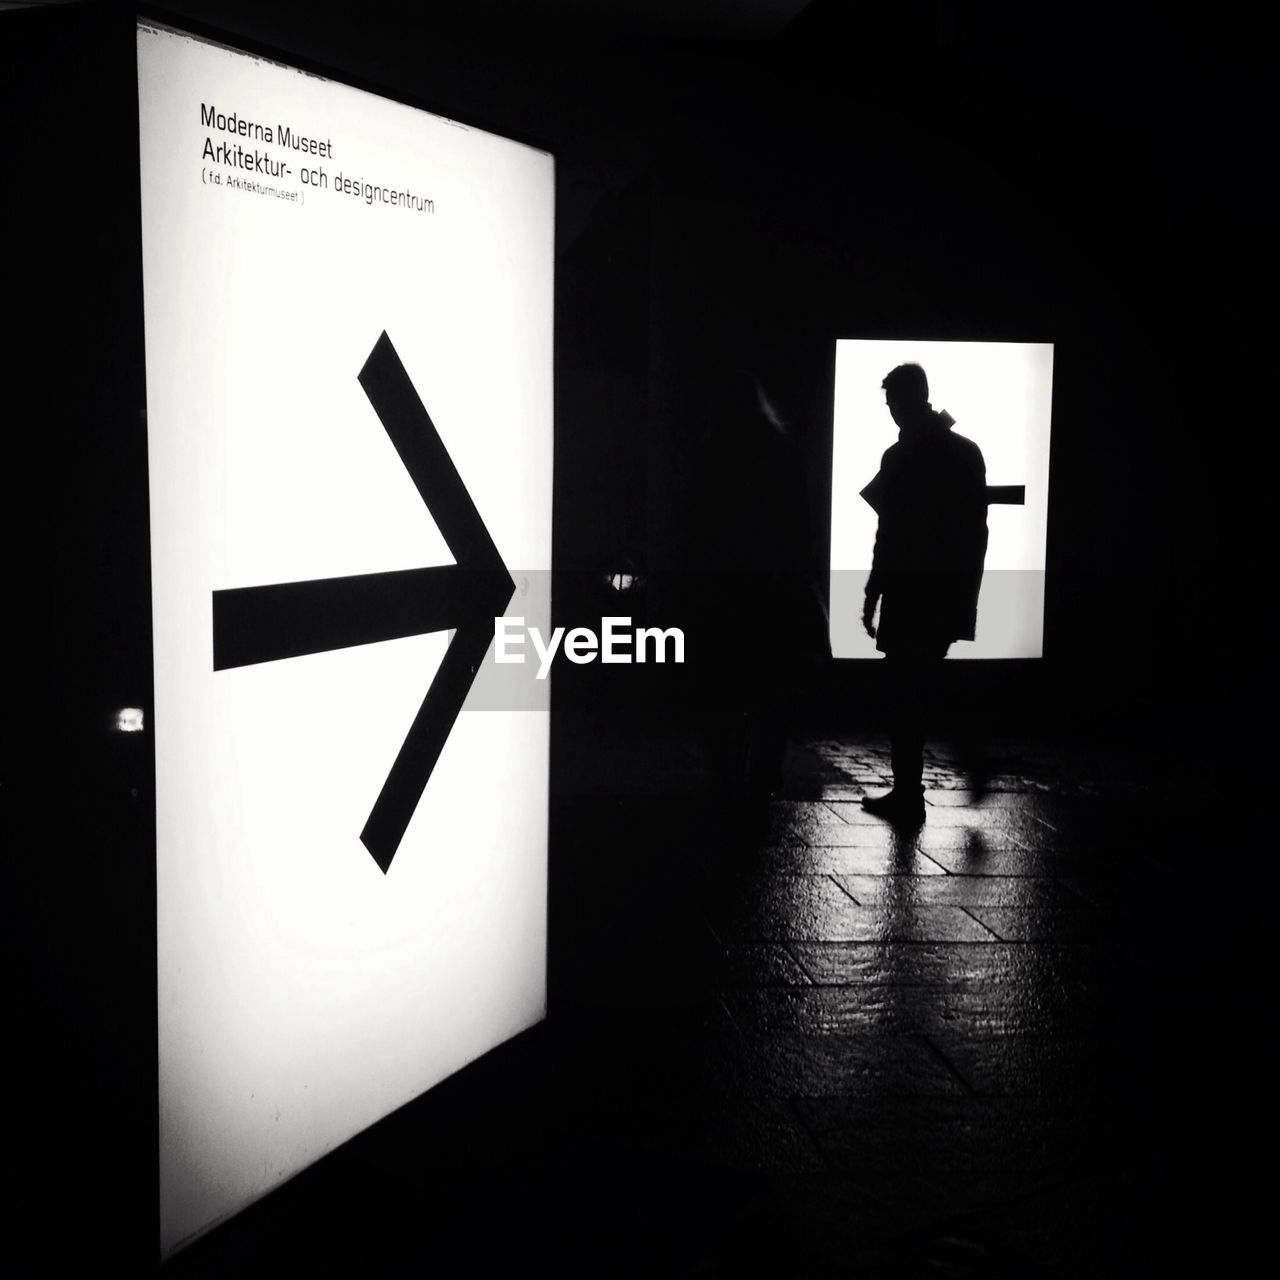 Man walking in moderna museet museum